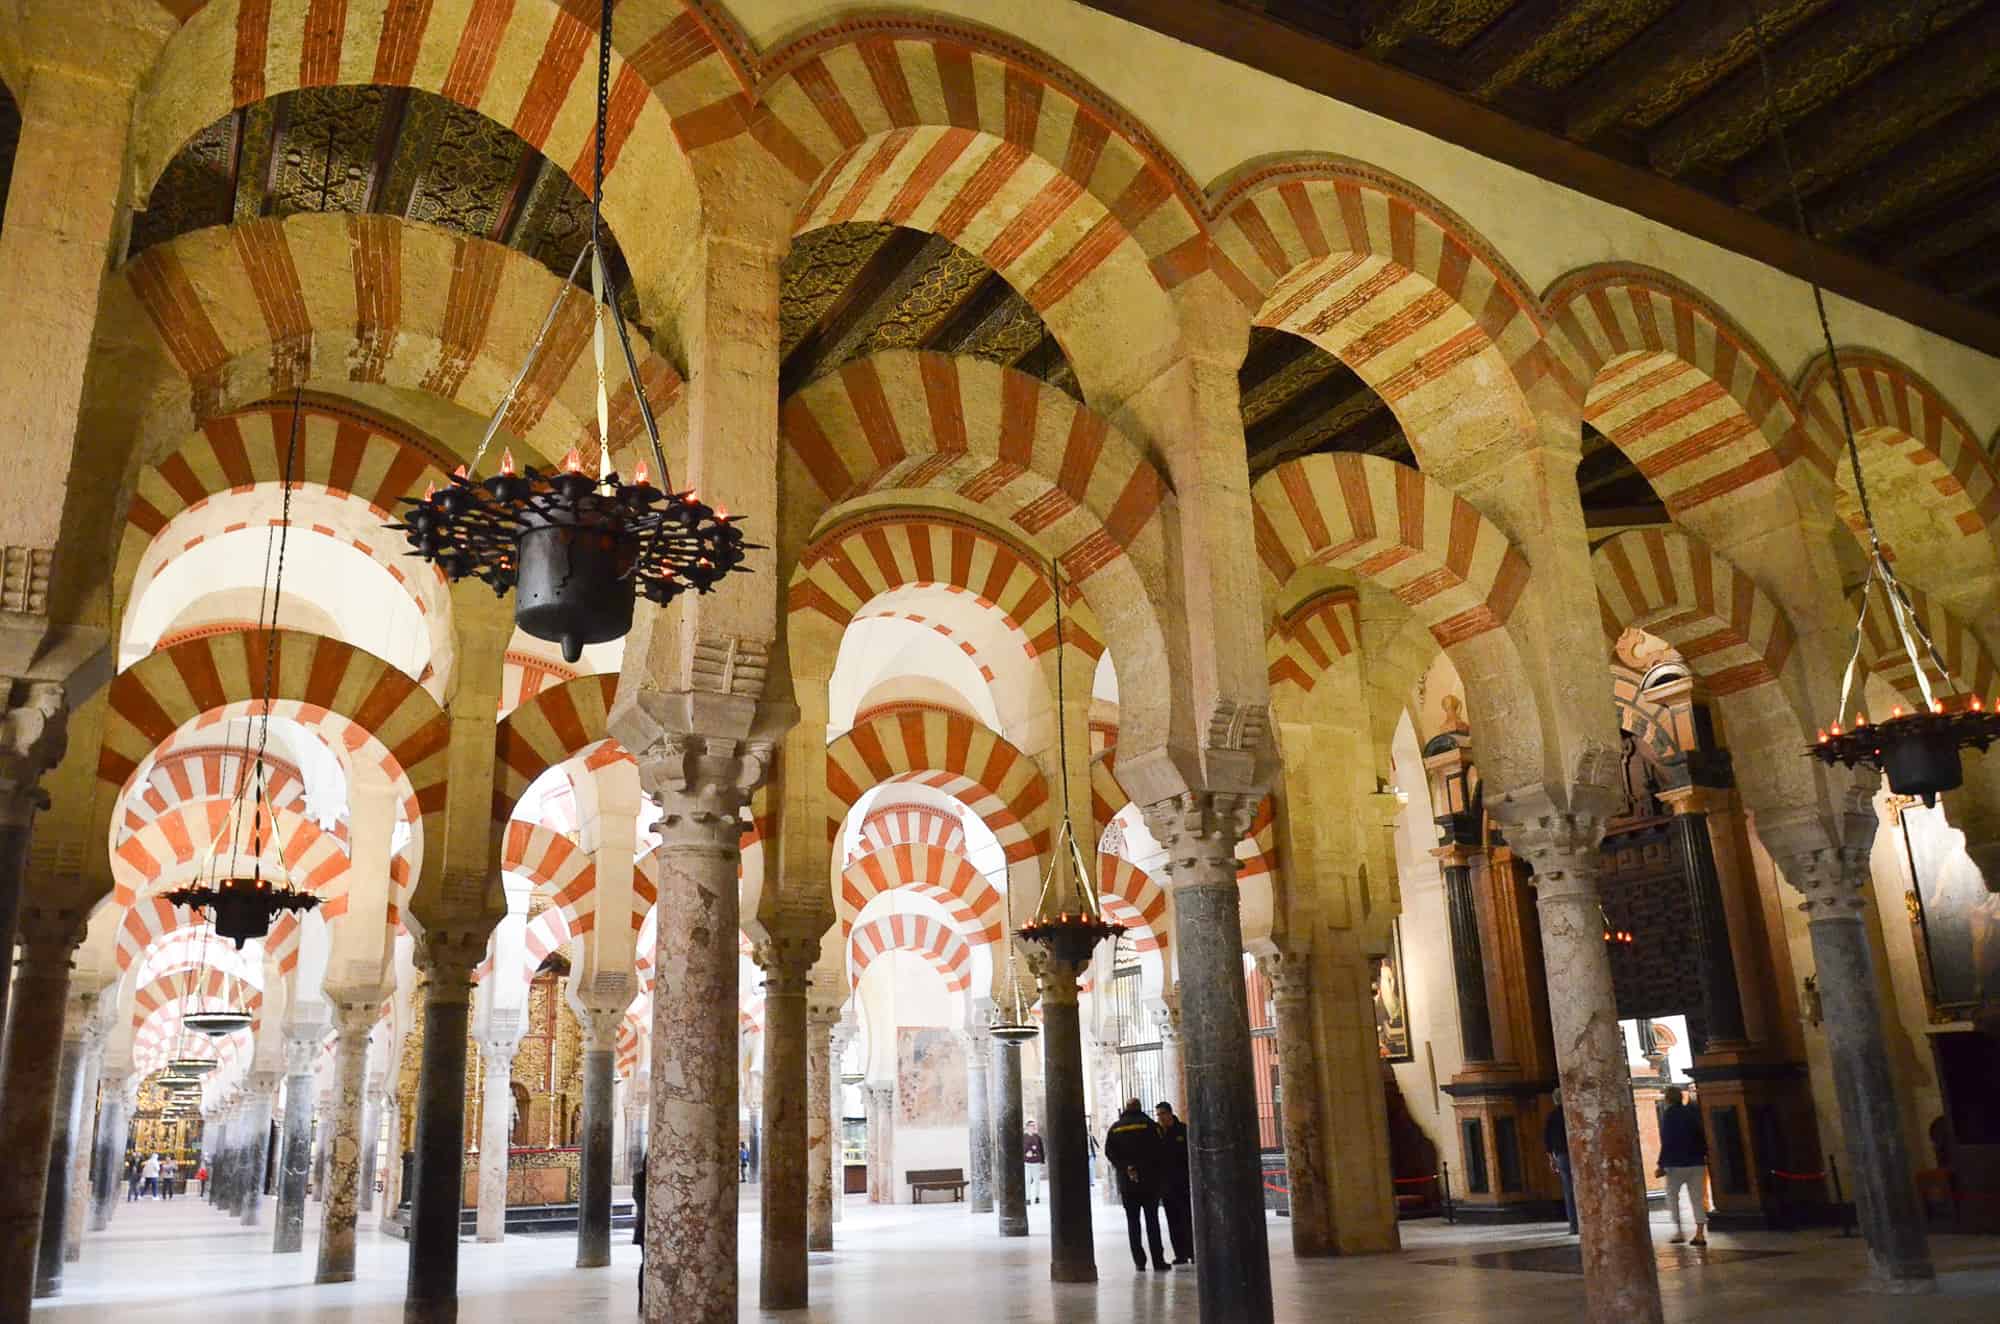 Spain - Cordoba - Mezquita Interior with people